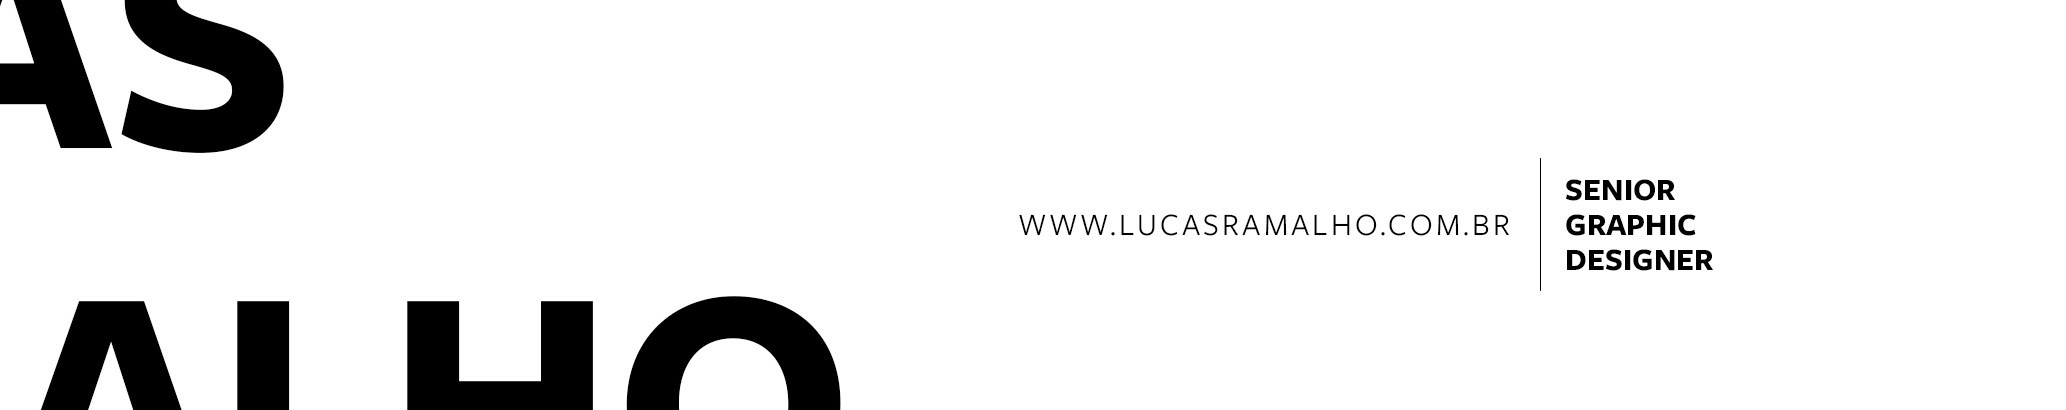 Lucas Ramalho's profile banner